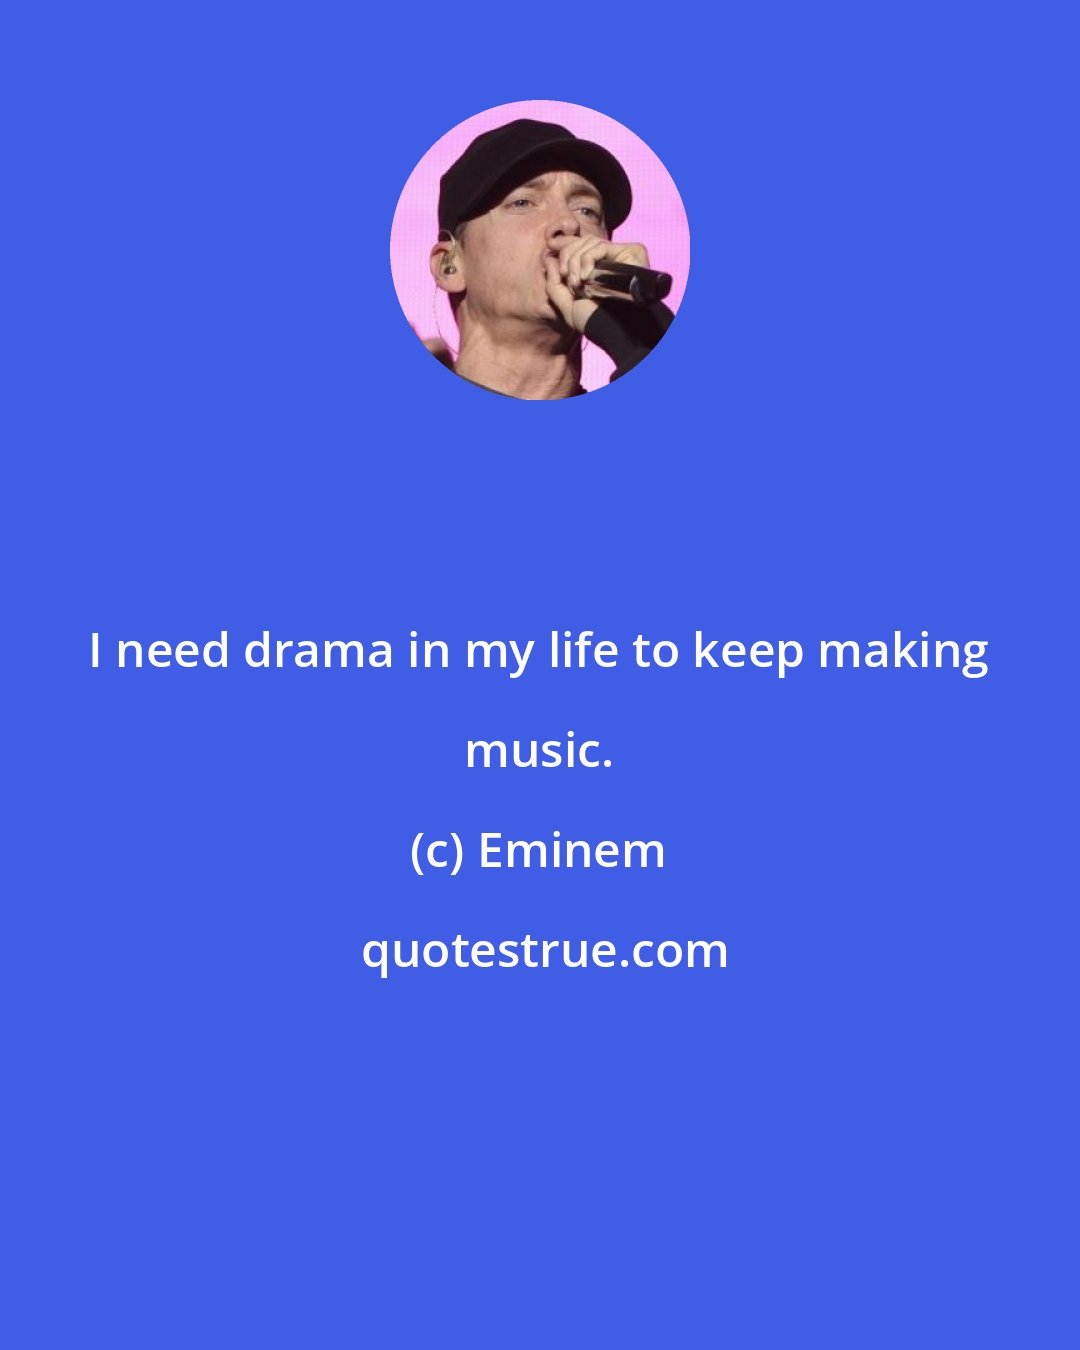 Eminem: I need drama in my life to keep making music.